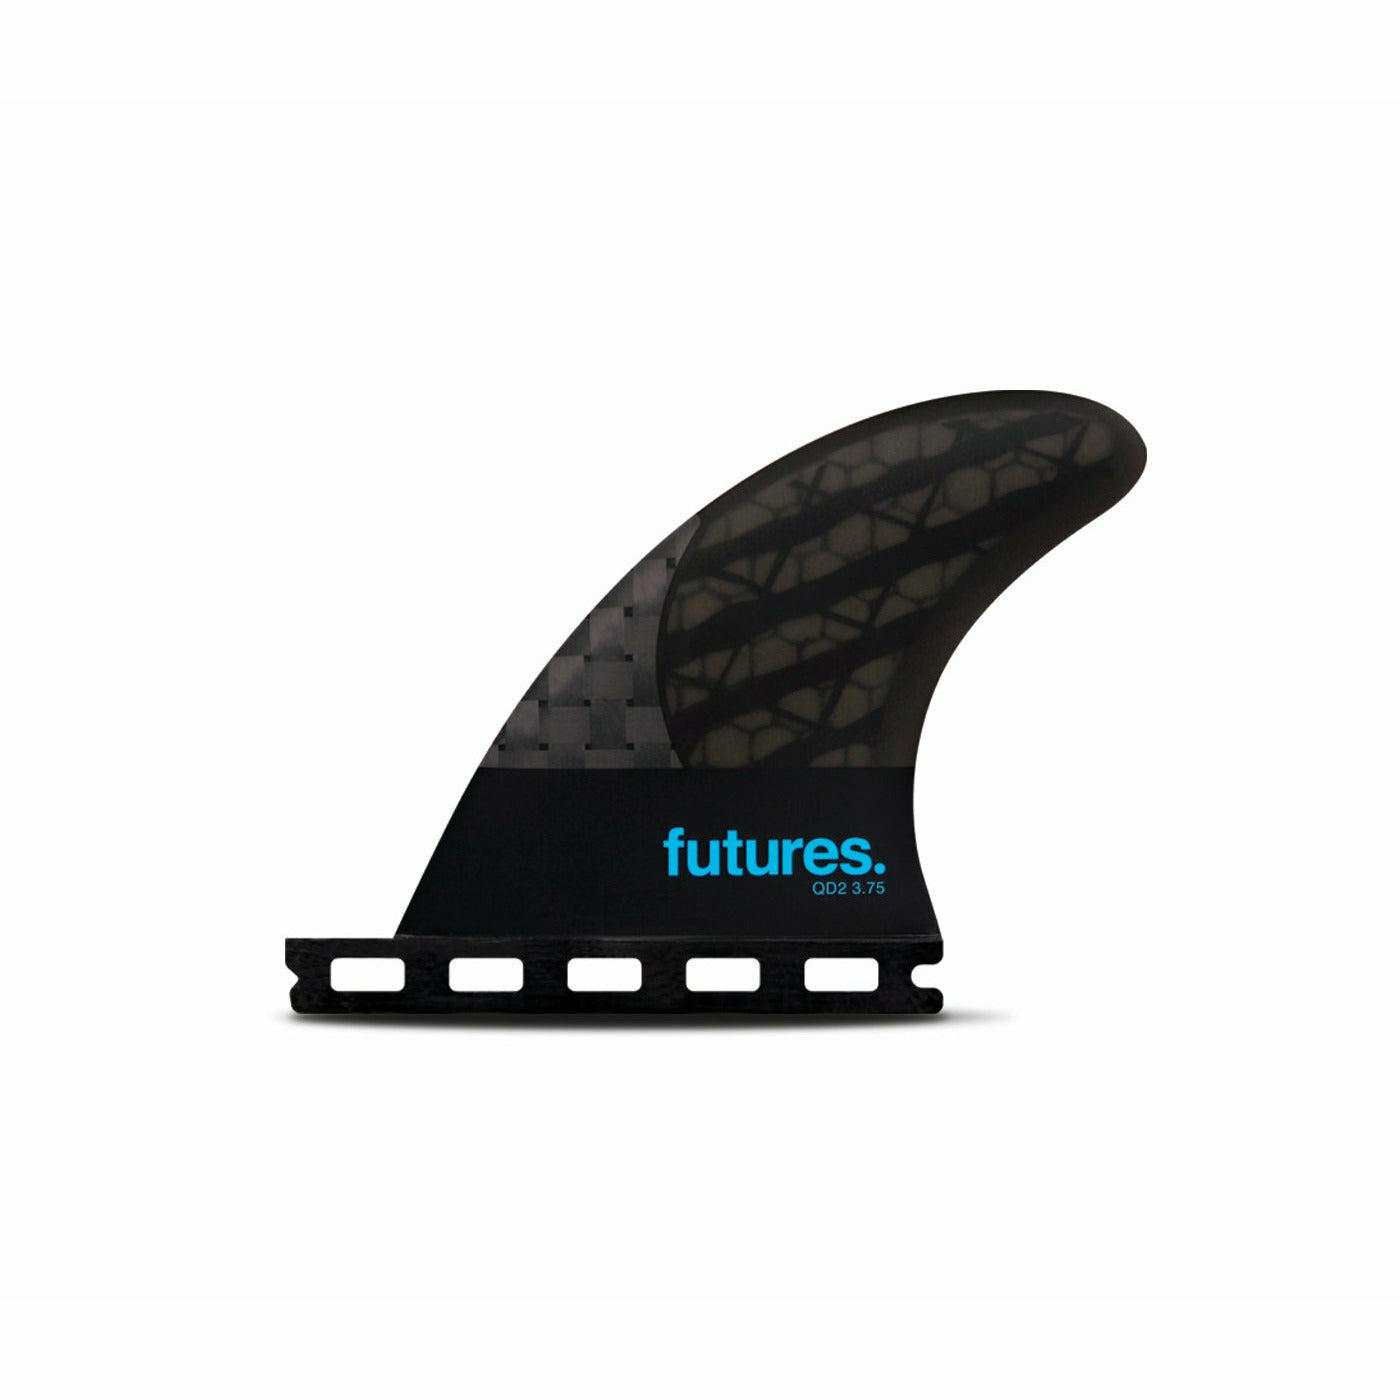 Futures - QD2 3.75 80/20 Blackstix 3.0 - Small (Smoke/Turquoise)